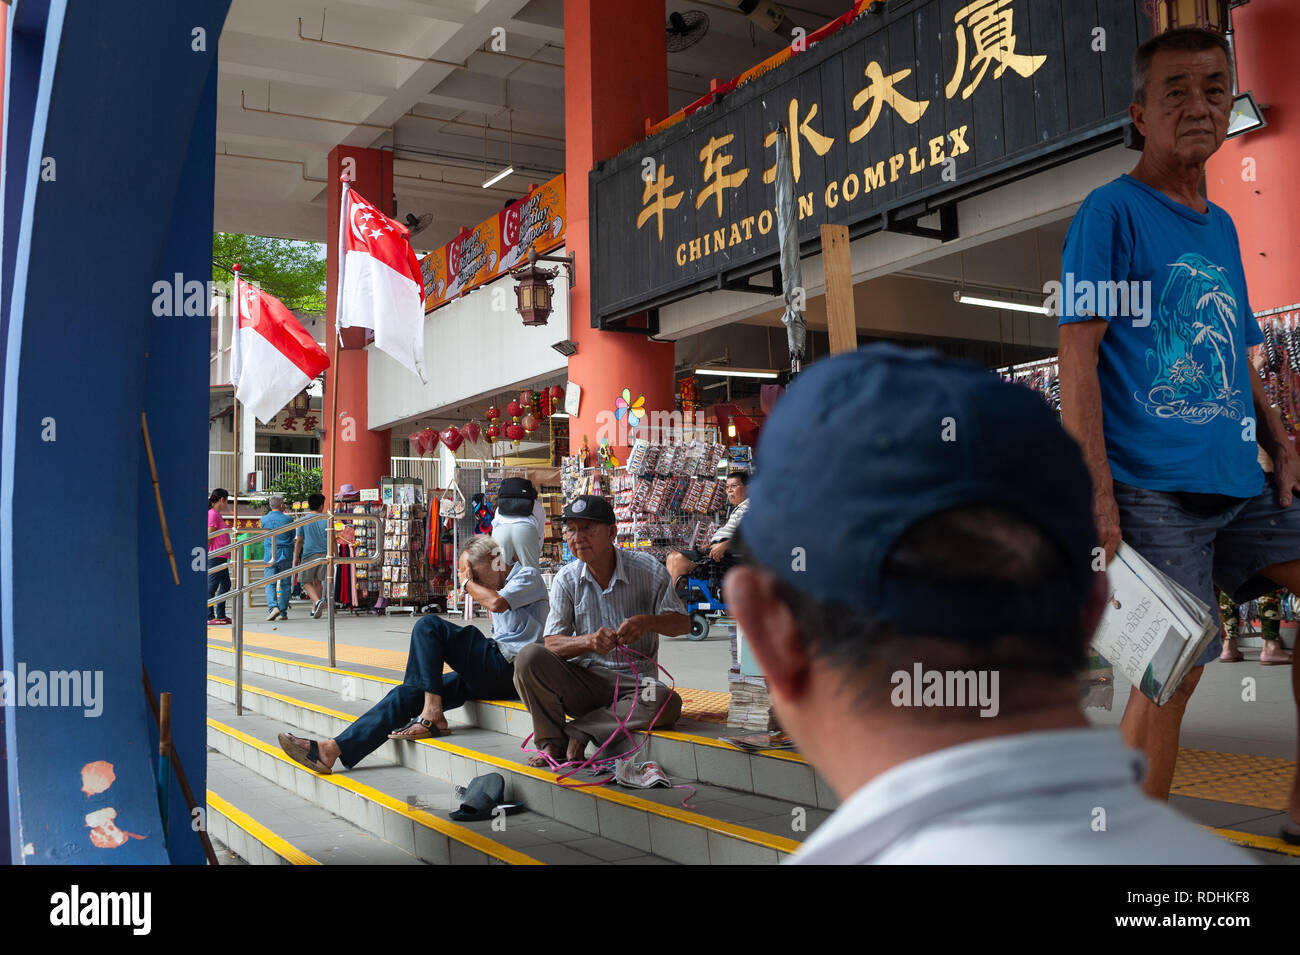 19.07.2018, Singapur, Republik Singapur, Asien - ältere Männer vor dem Chinatown auf Kreta Ayer Square Komplex erfüllen. Stockfoto